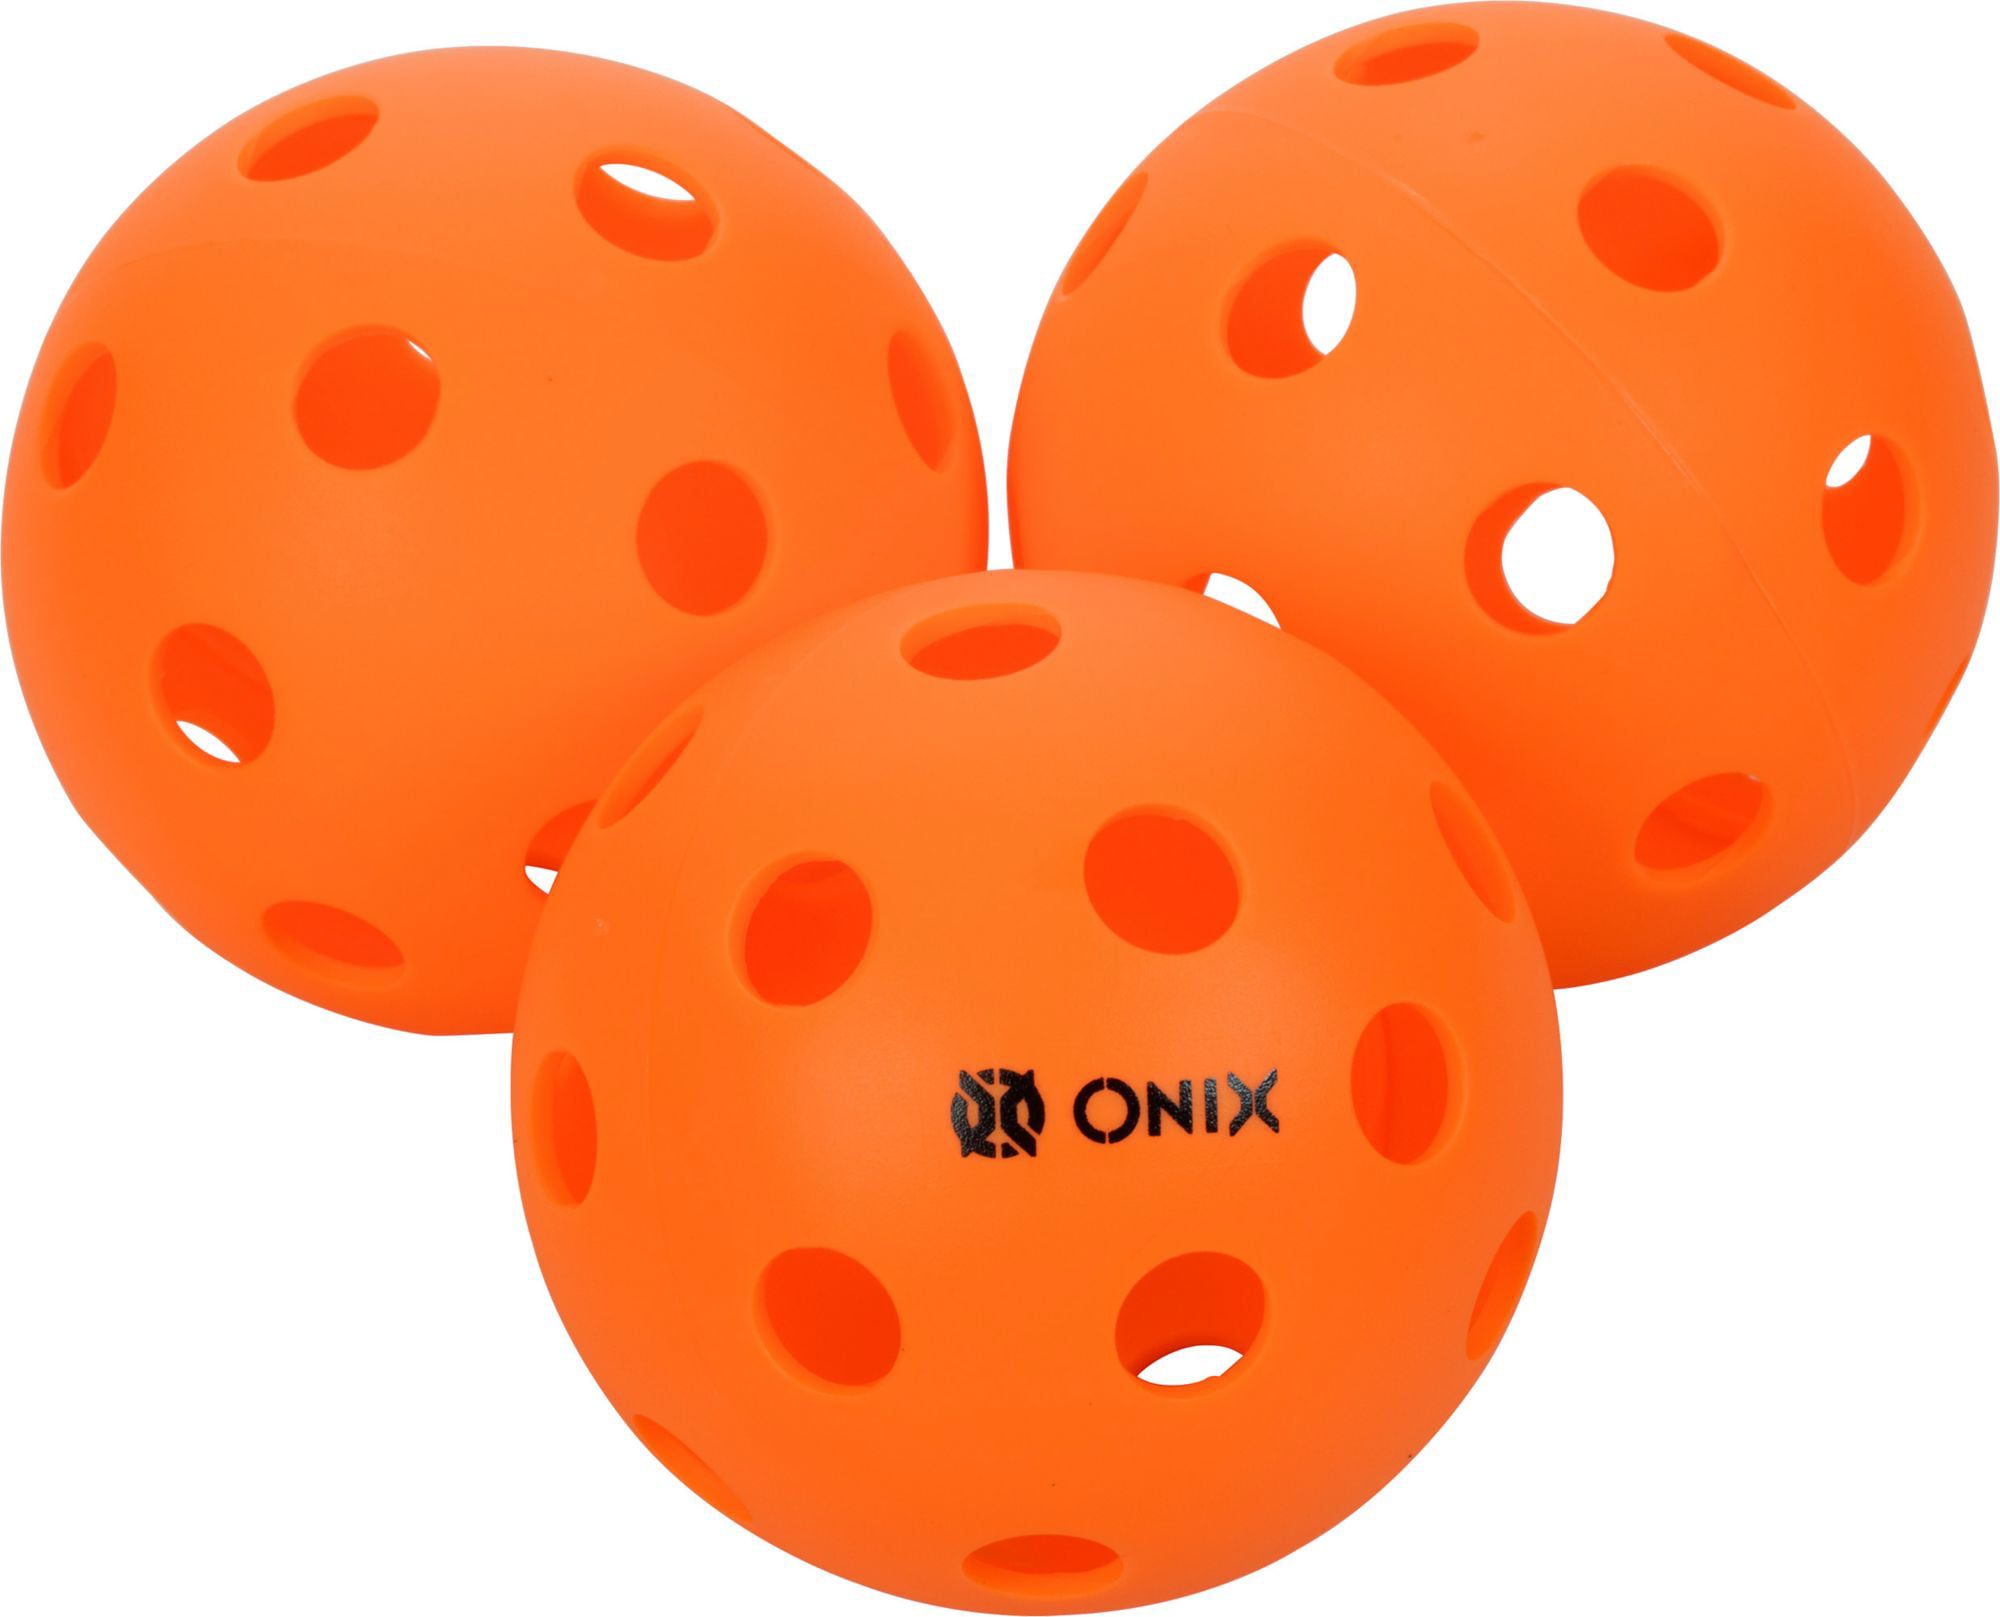 Onix Pure 2 Indoor Pickleball Balls Escalade Sports KZ32003O-P 